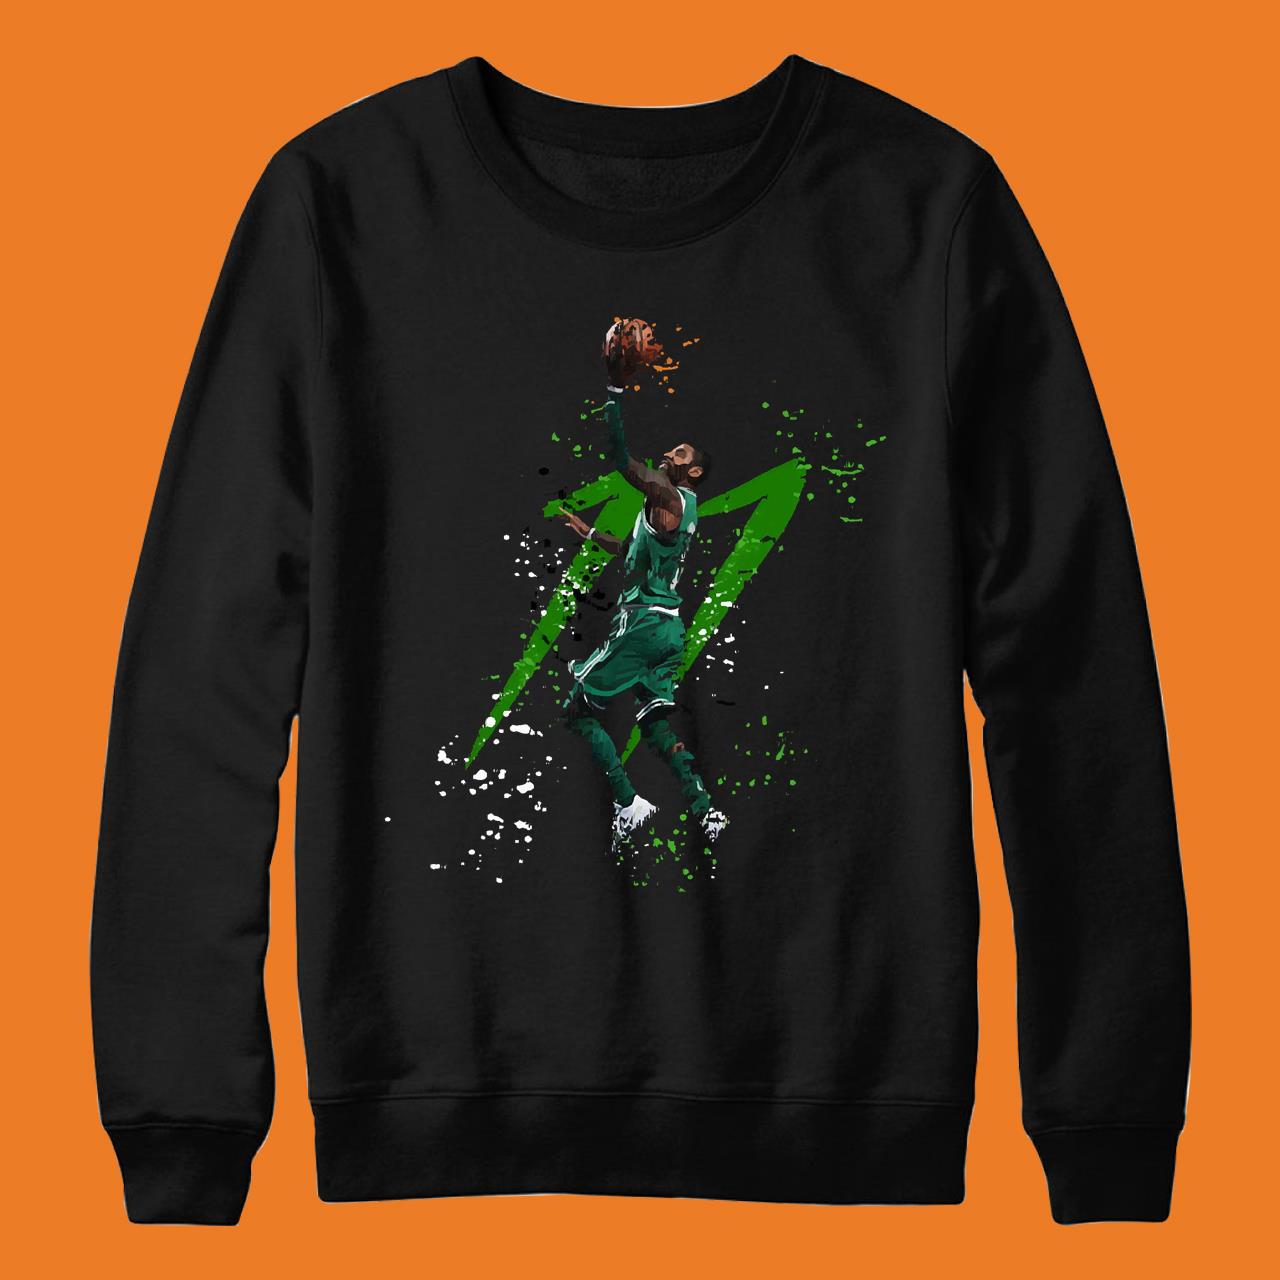 Kyrie Irving Basketball T-Shirt